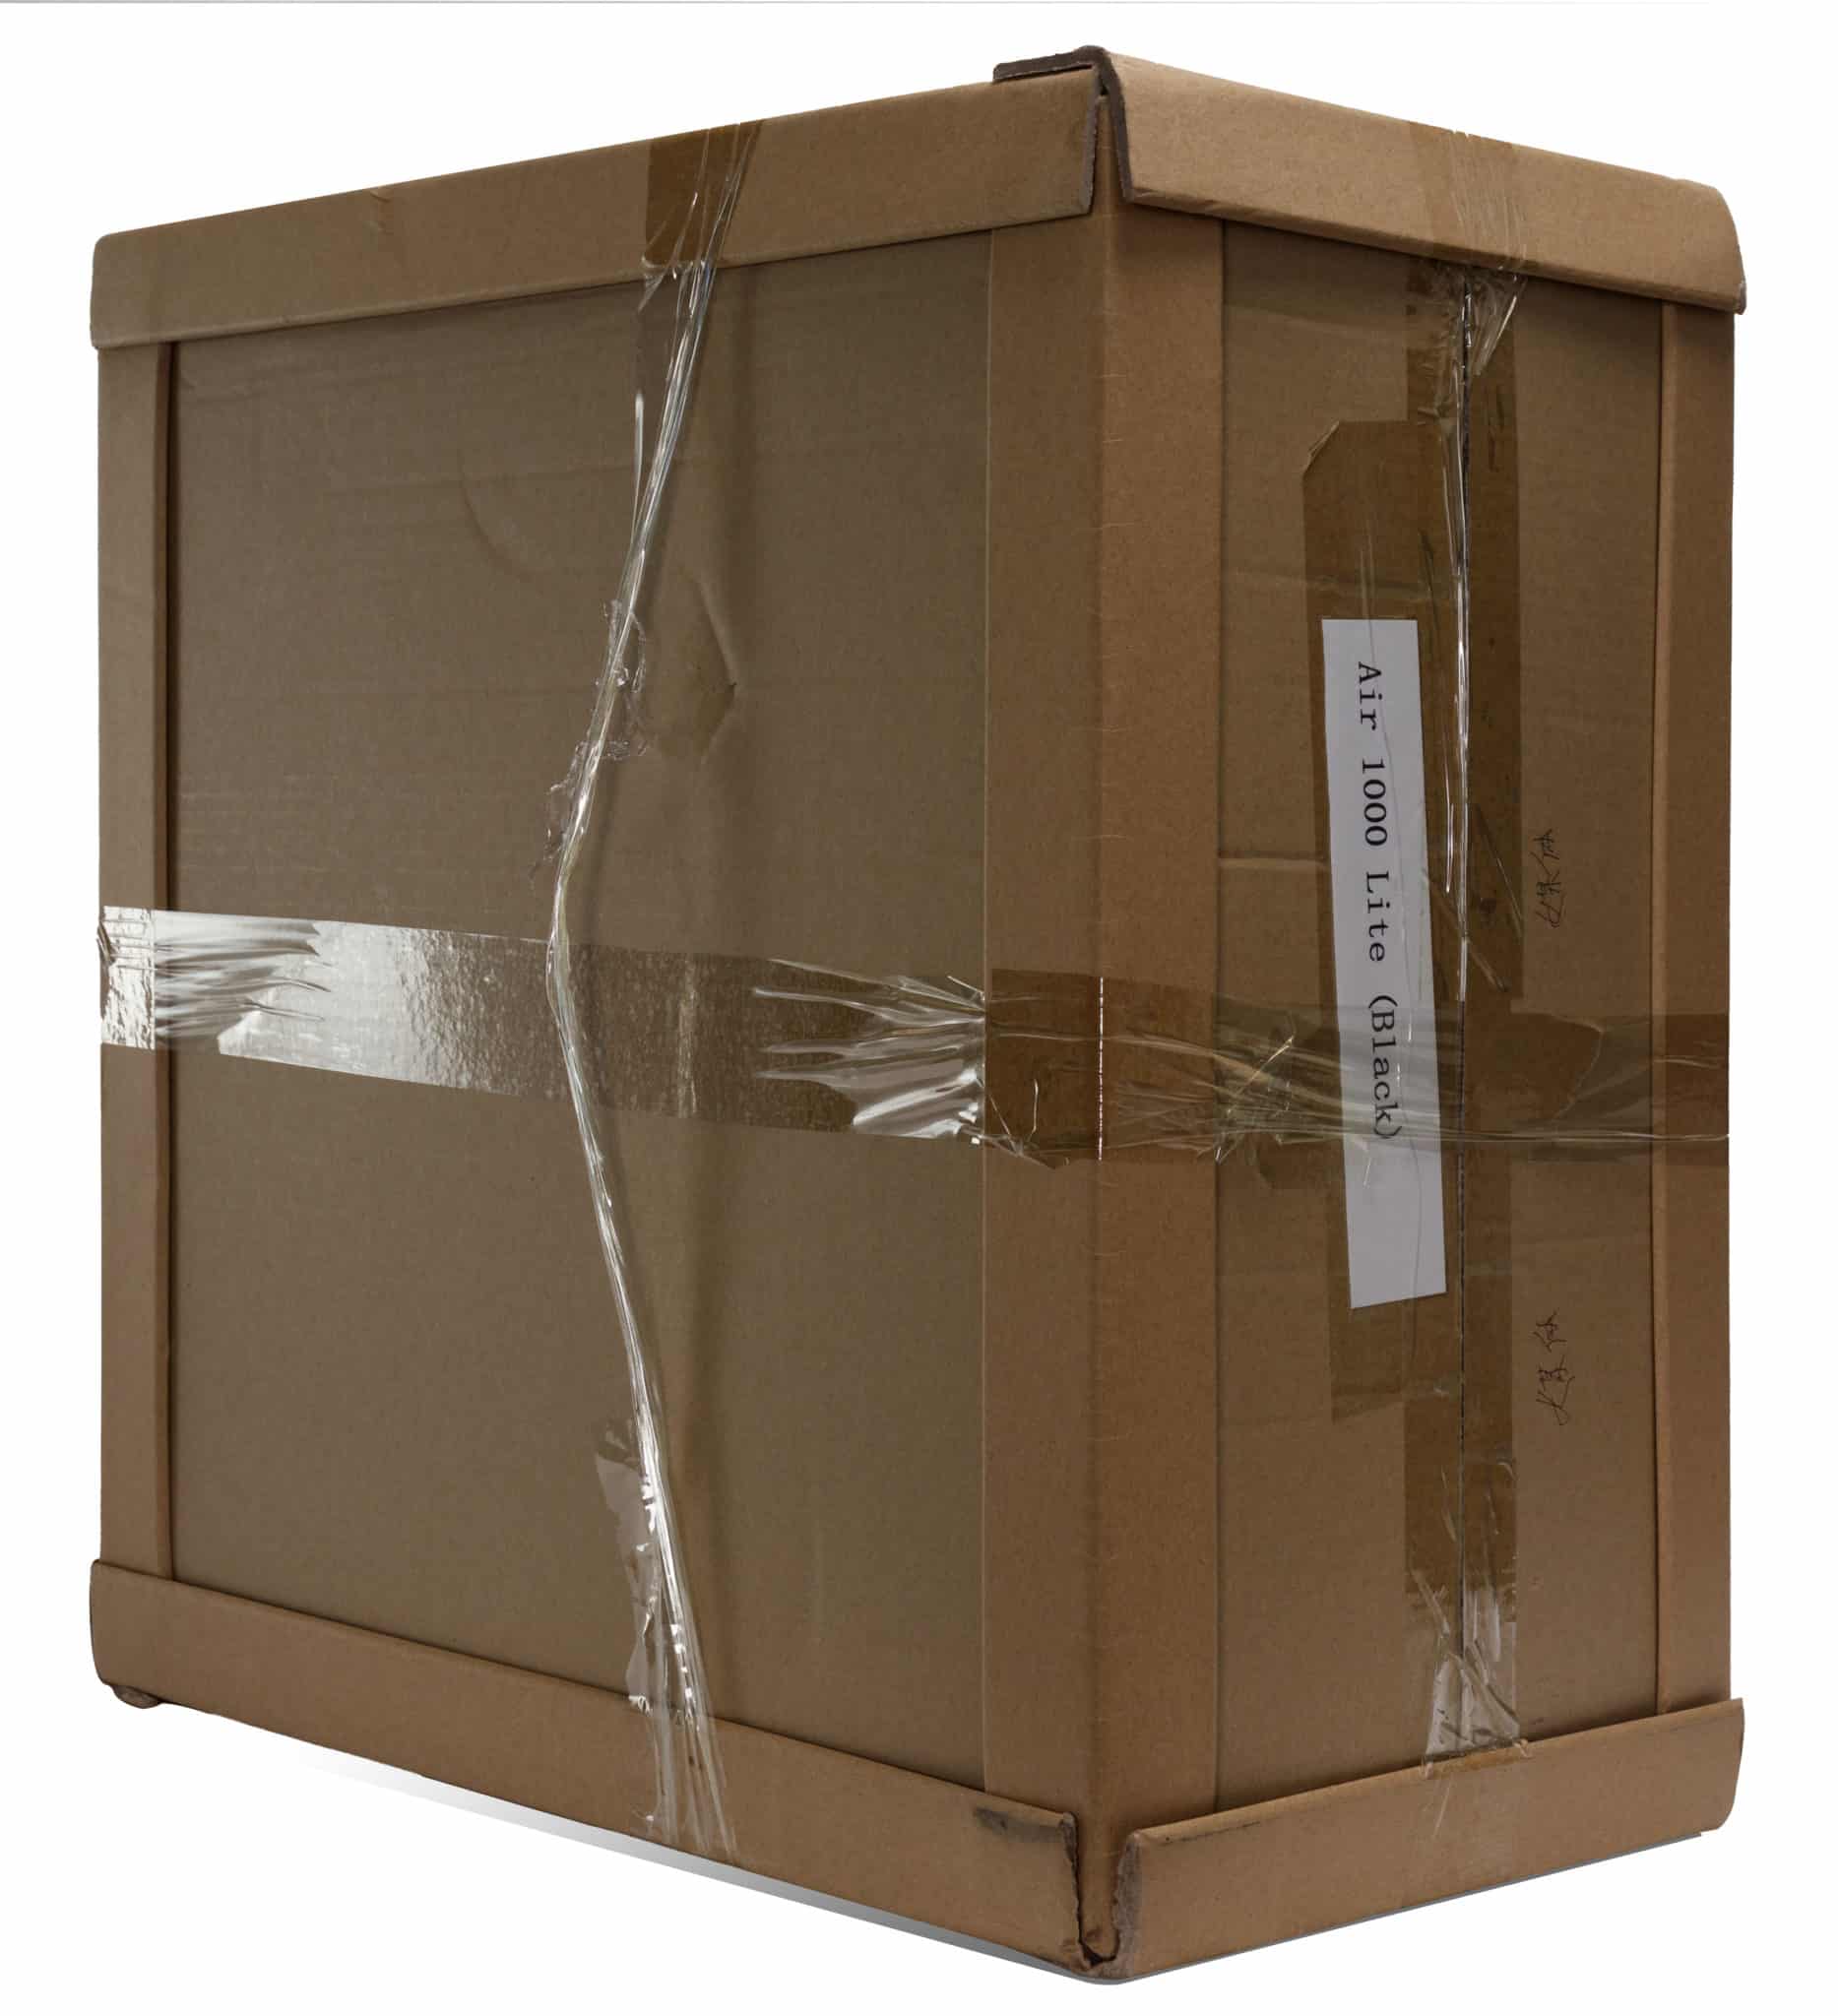 MONTECH AIR 1000 LITE Case Box Side View